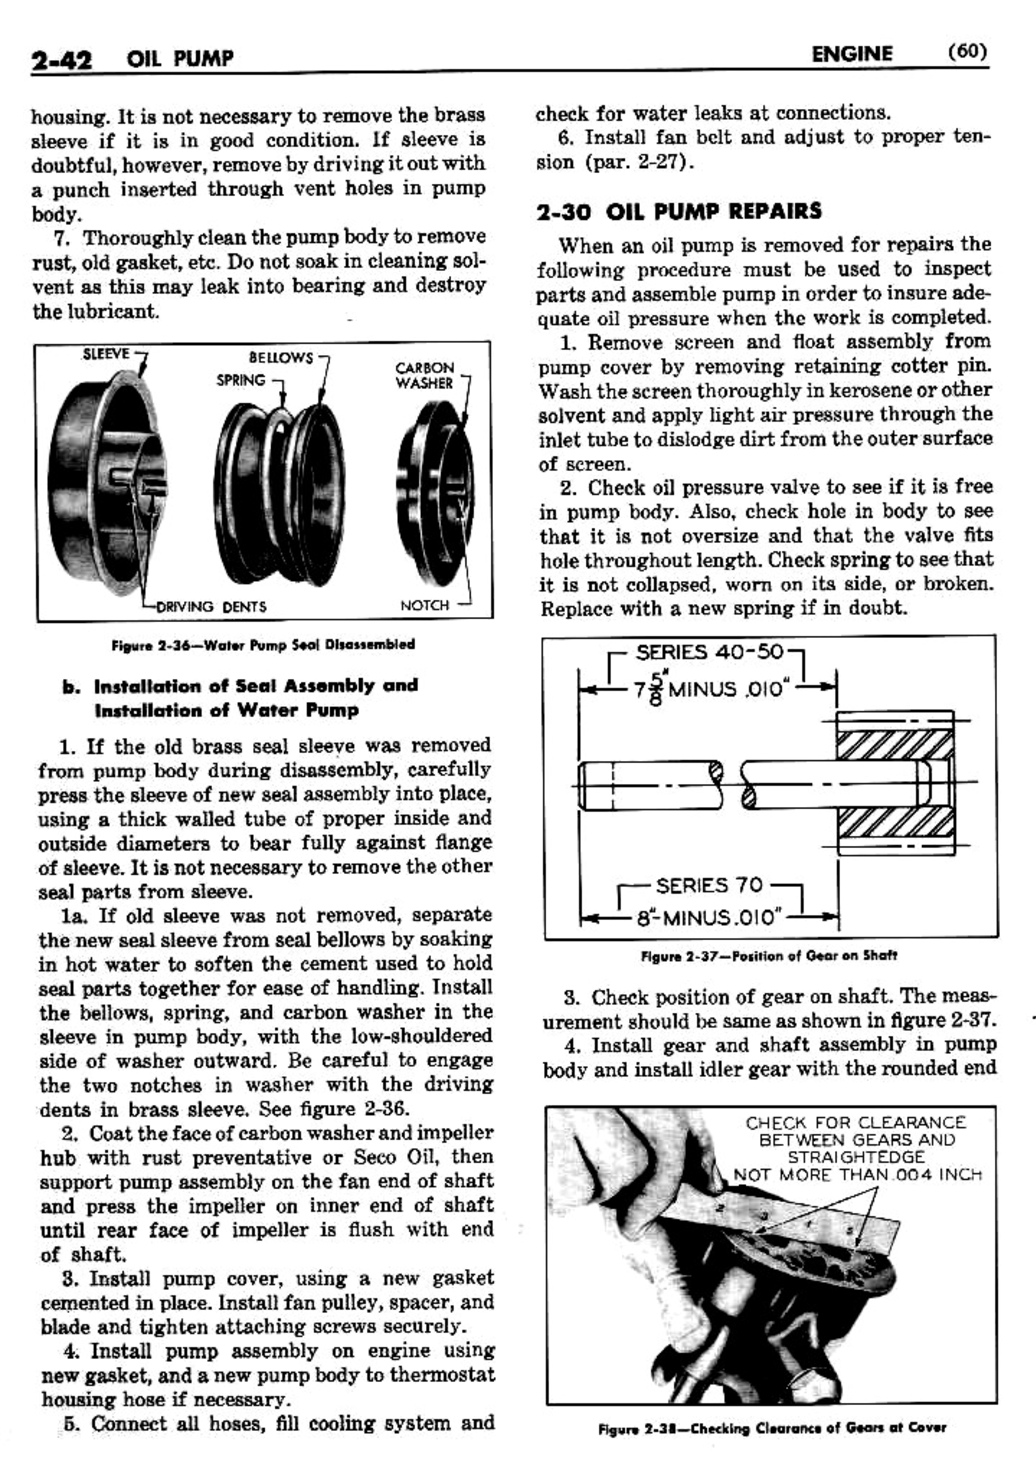 n_03 1950 Buick Shop Manual - Engine-042-042.jpg